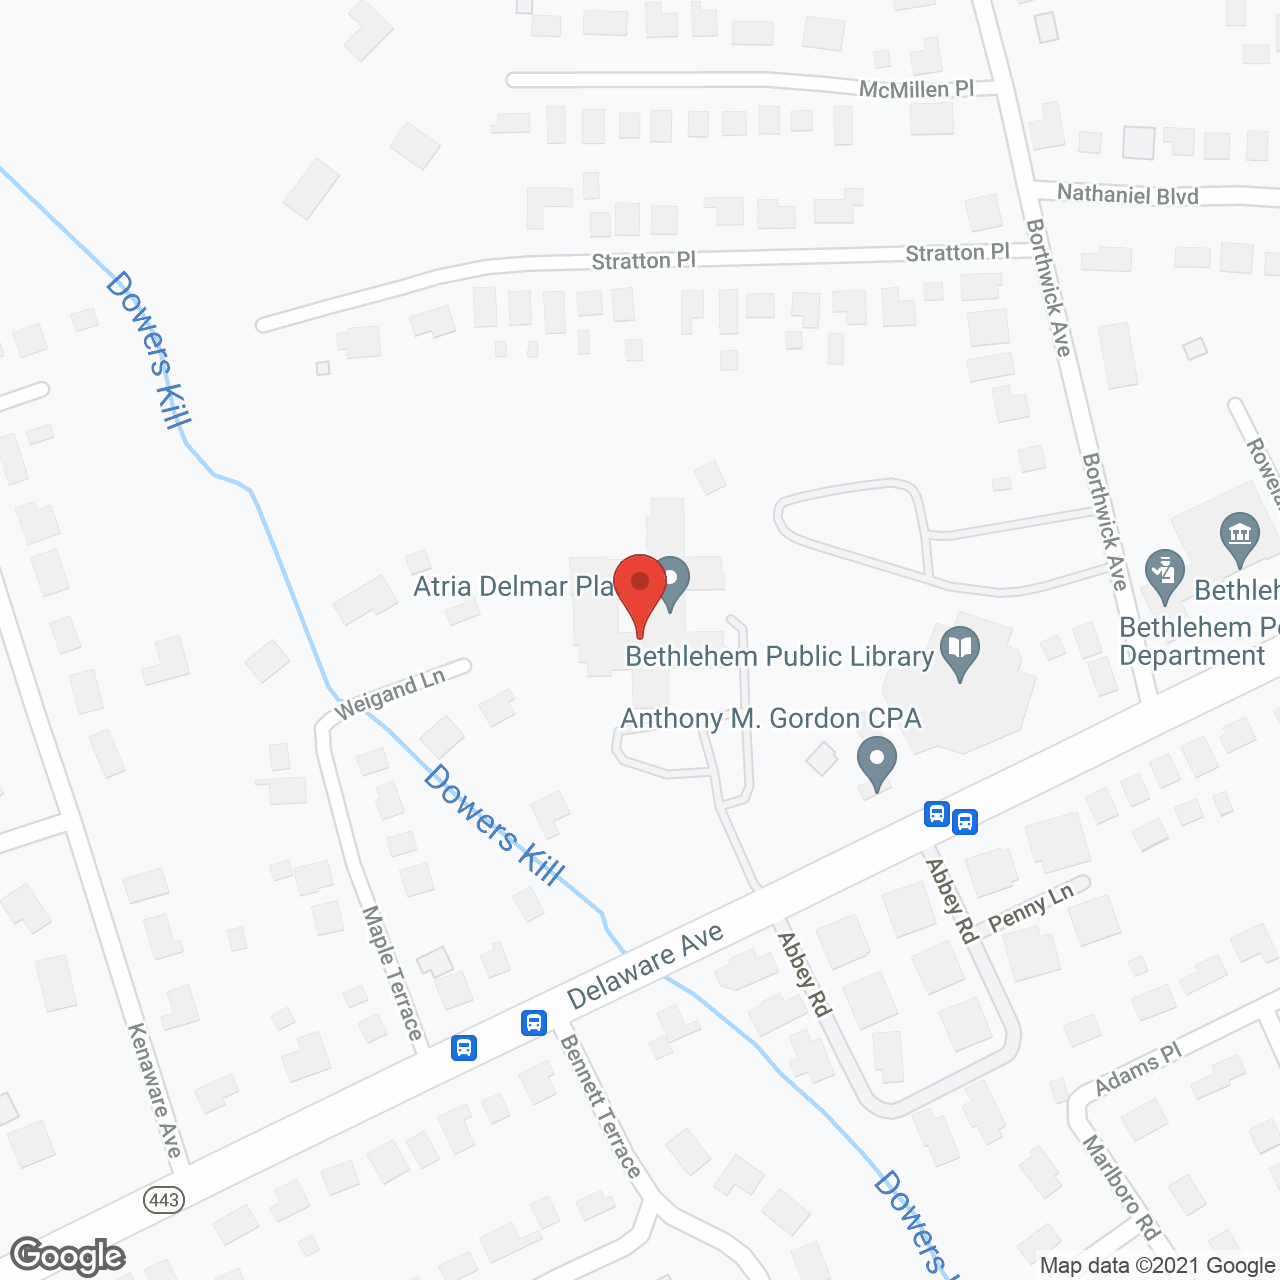 Peregrine Delmar Place in google map